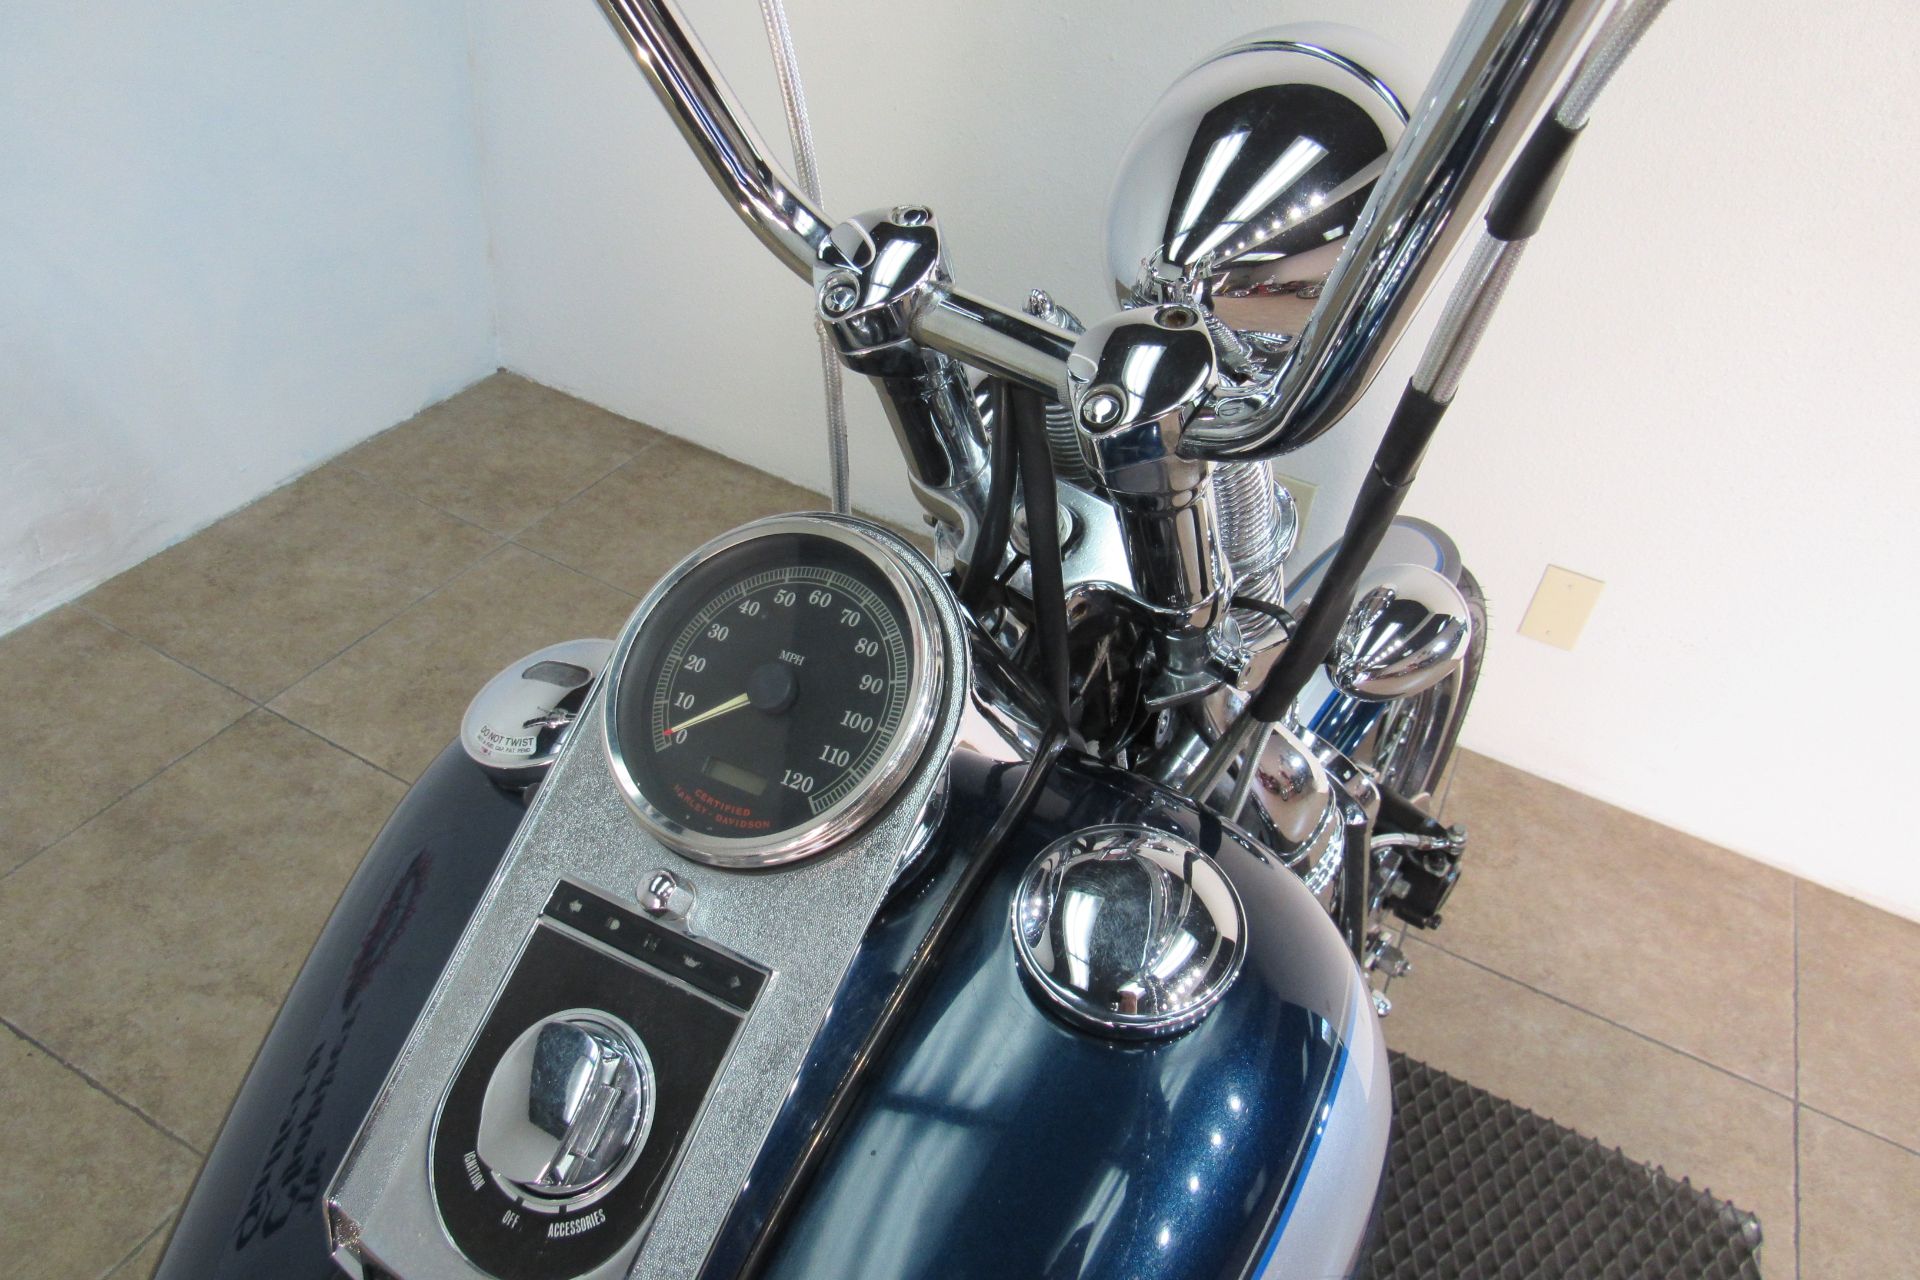 2002 Harley-Davidson FXSTS/FXSTSI Springer®  Softail® in Temecula, California - Photo 22